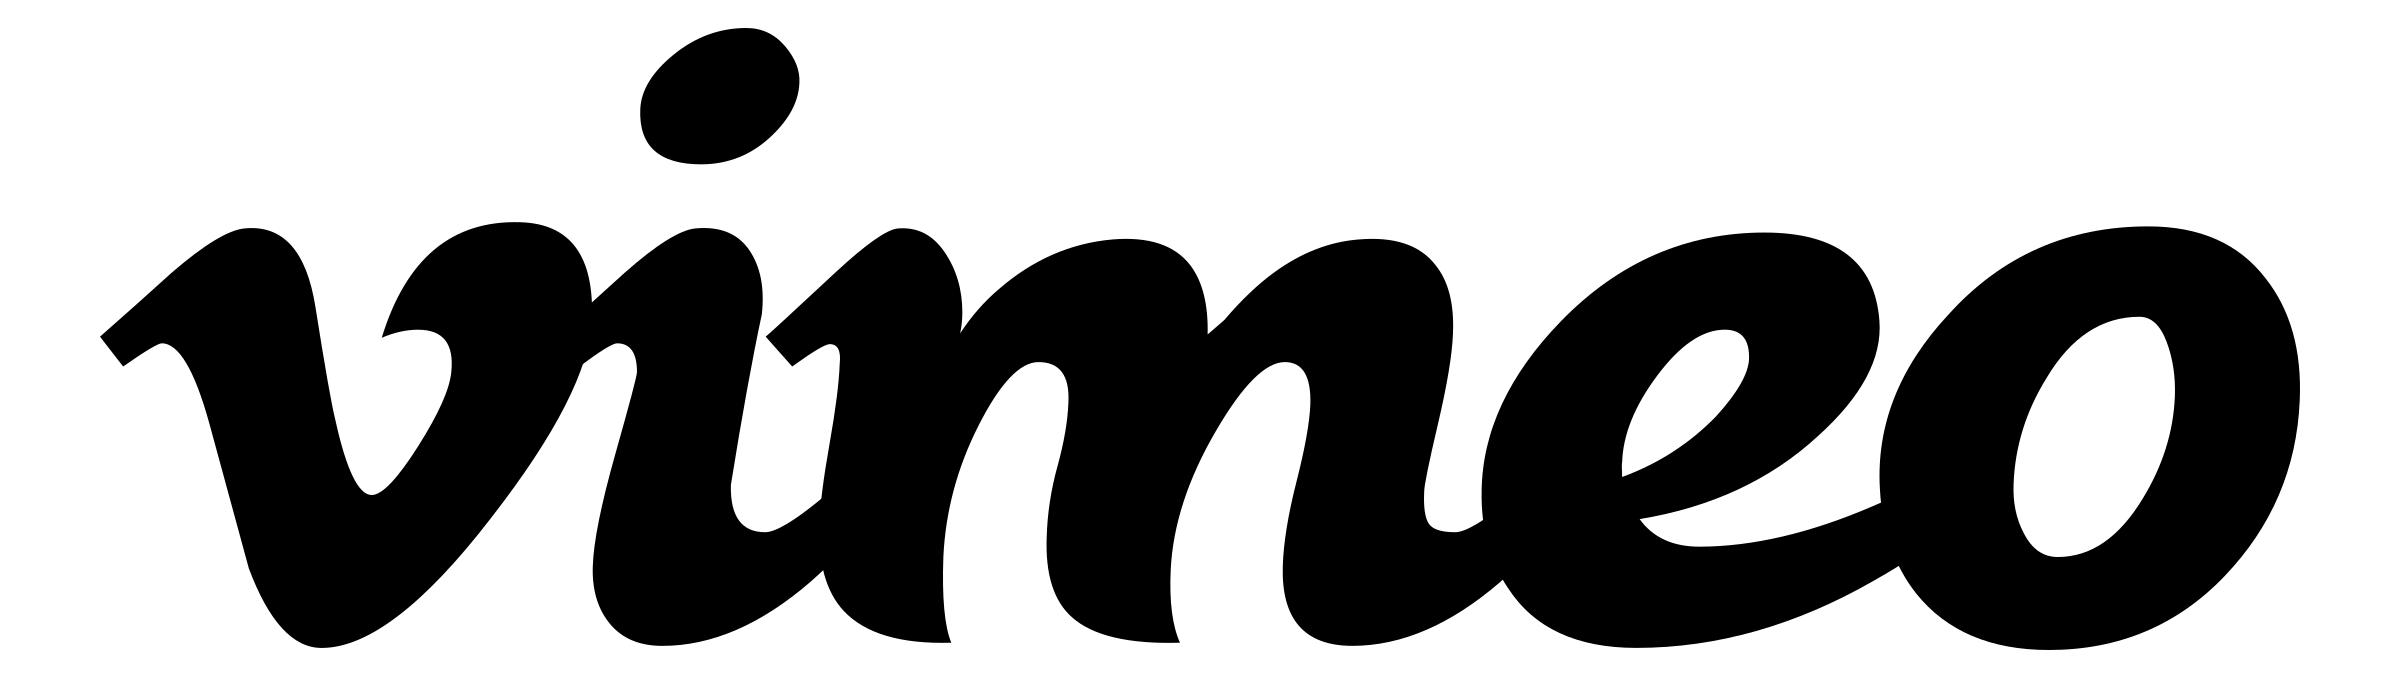 vimeo-logo-black-transparent.png